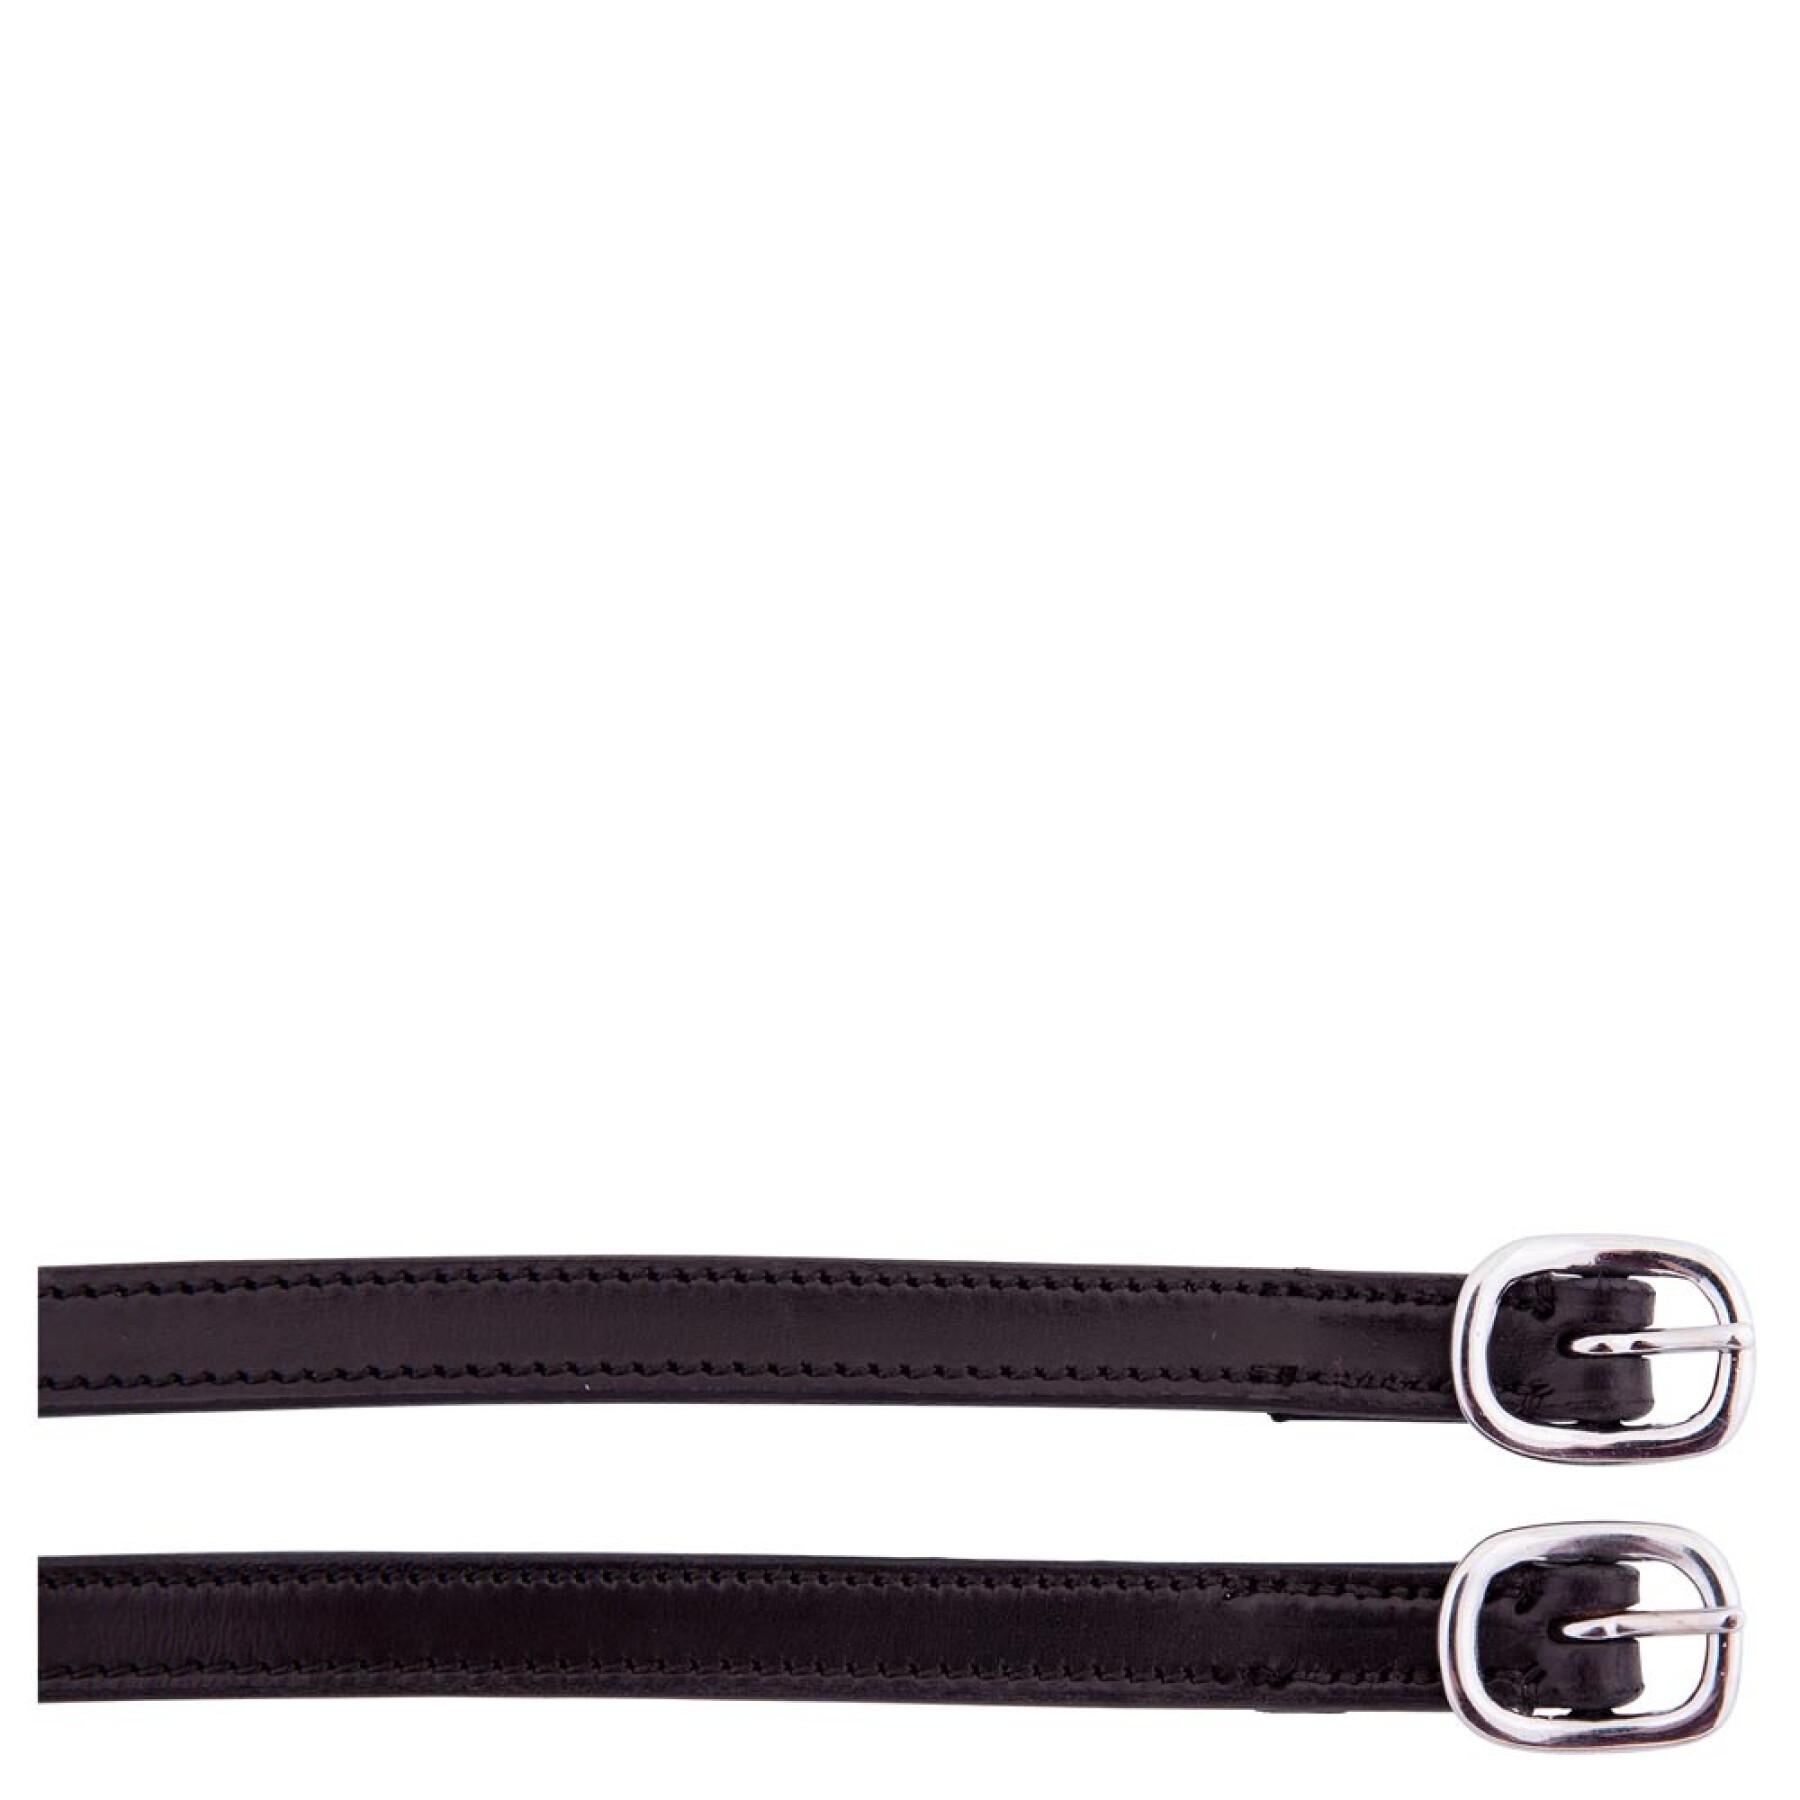 Leather spur straps for horses BR Equitation grand format